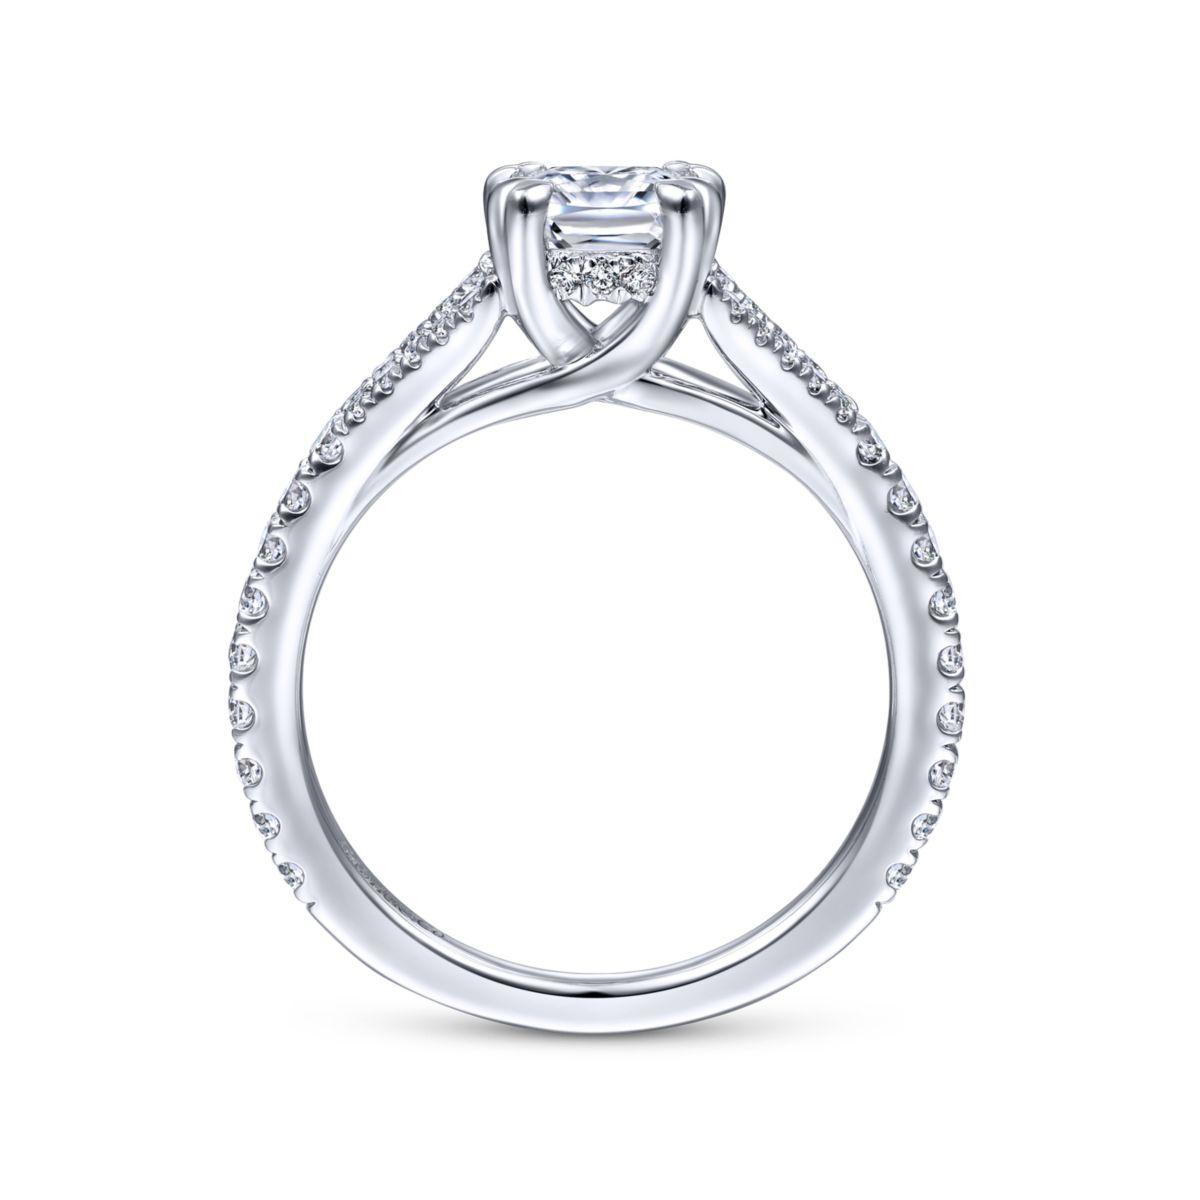 GABRIEL & CO – CUSHION CUT DIAMOND ENGAGEMENT RING - Beard's Diamonds